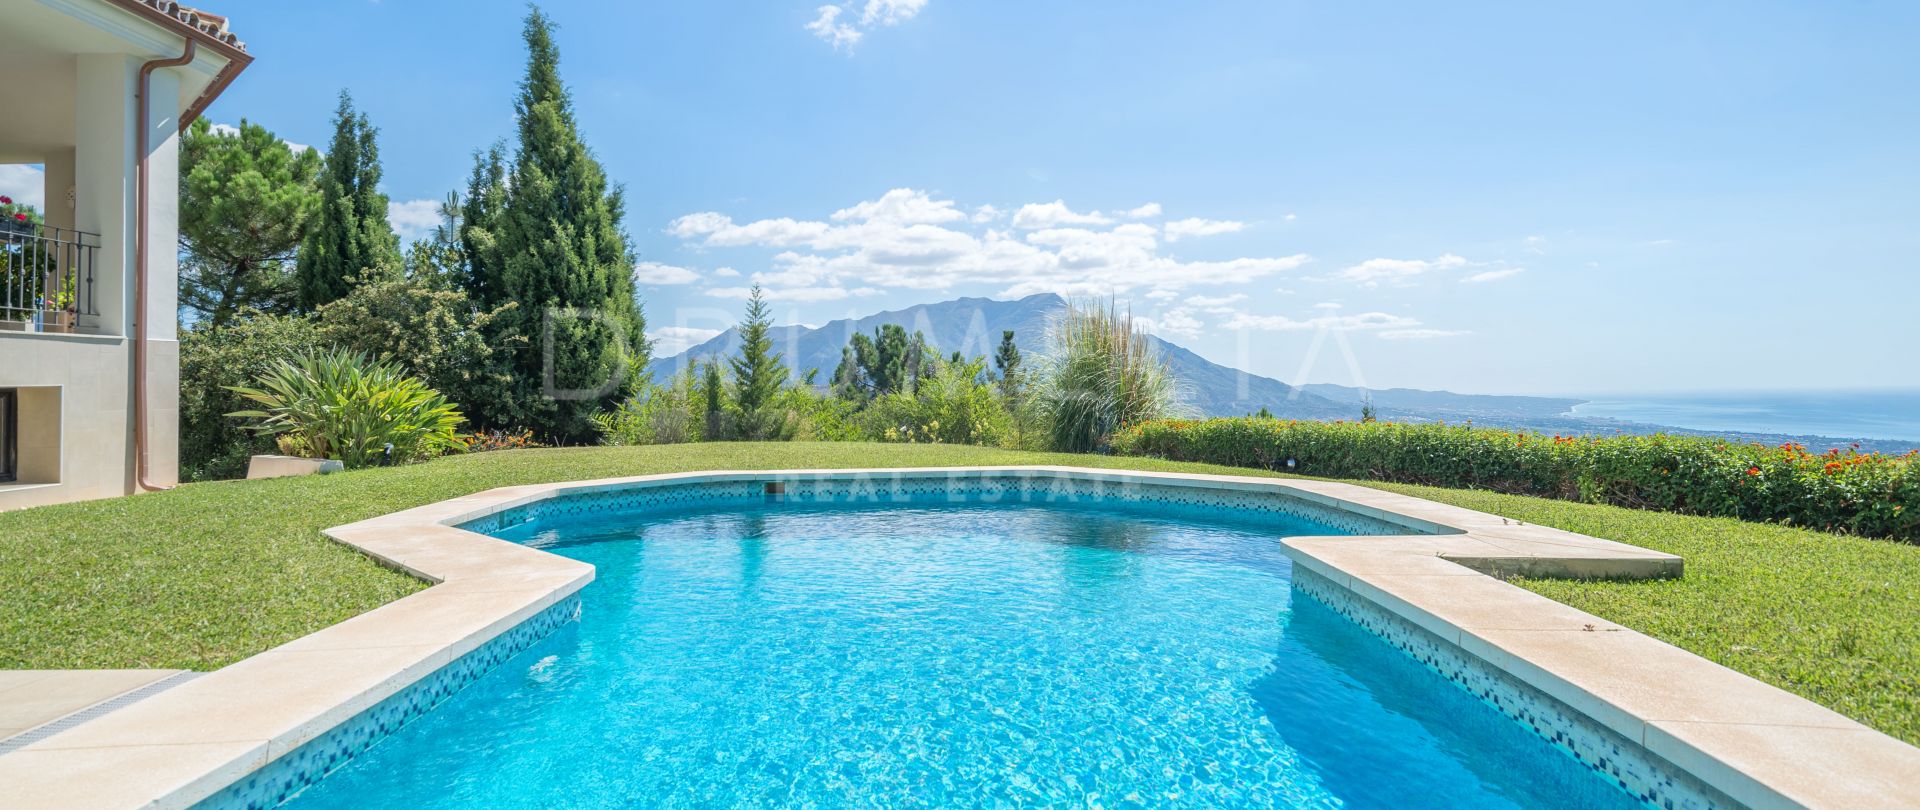 Charming Classic Luxury Villa with Mediterranean flair in Zagaleta Golf Club